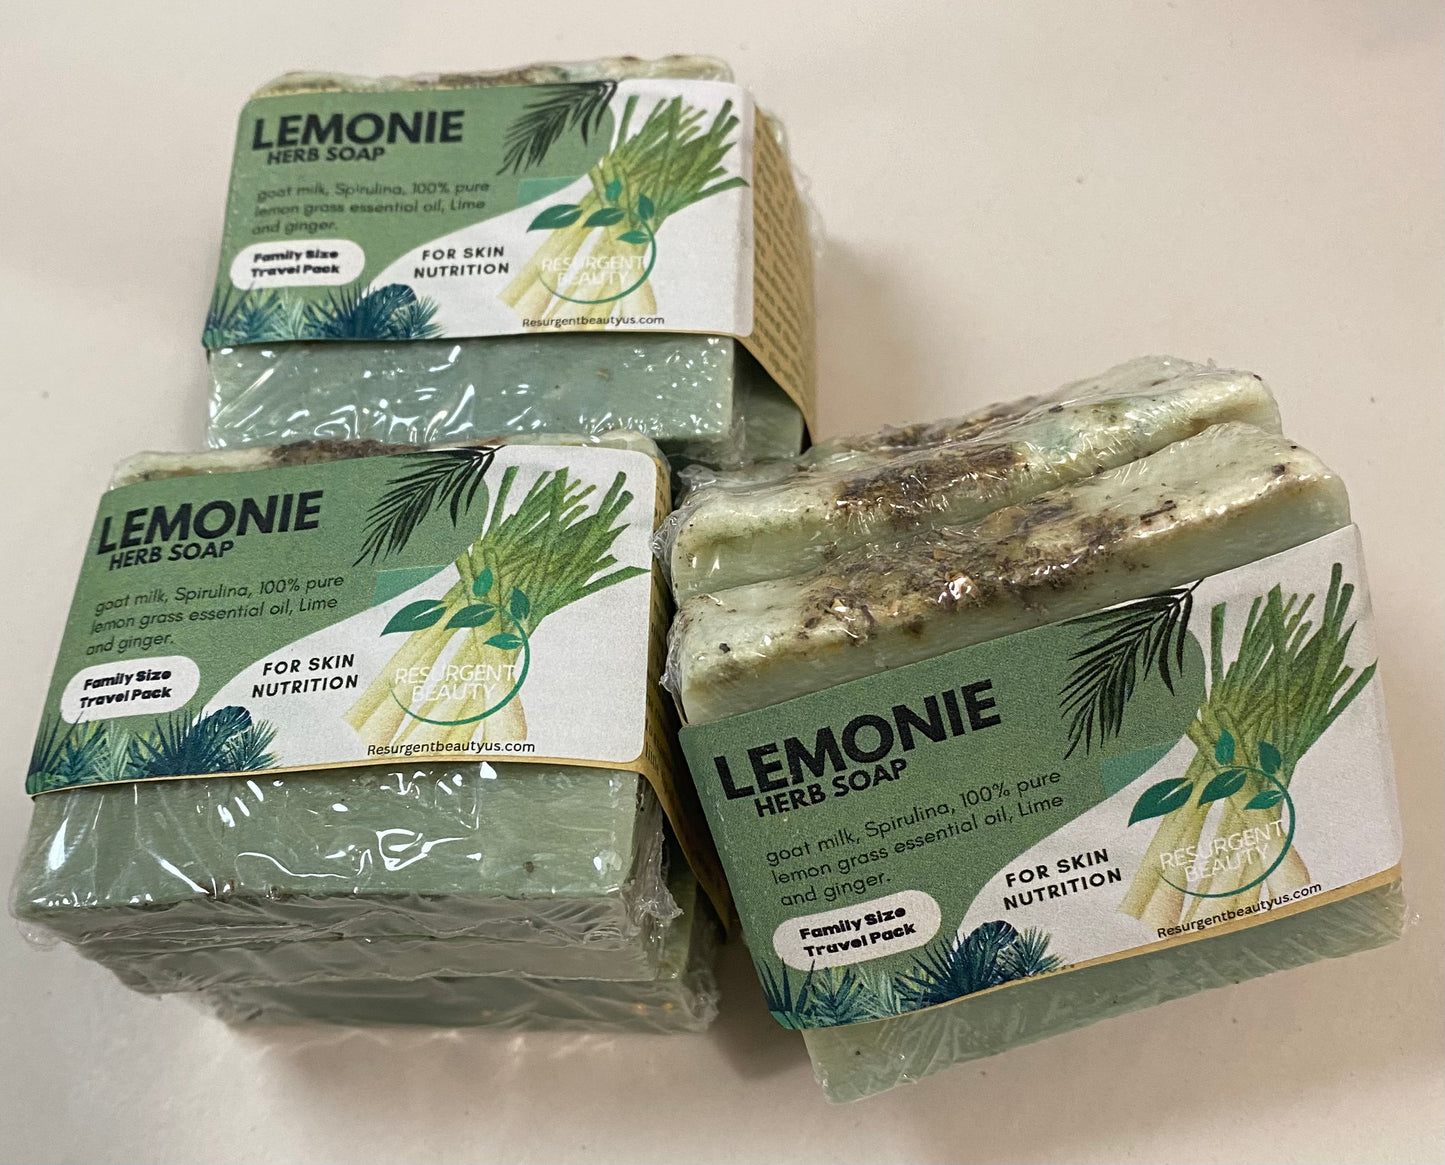 Lemonie Herb Soap- For Skin Nutrition